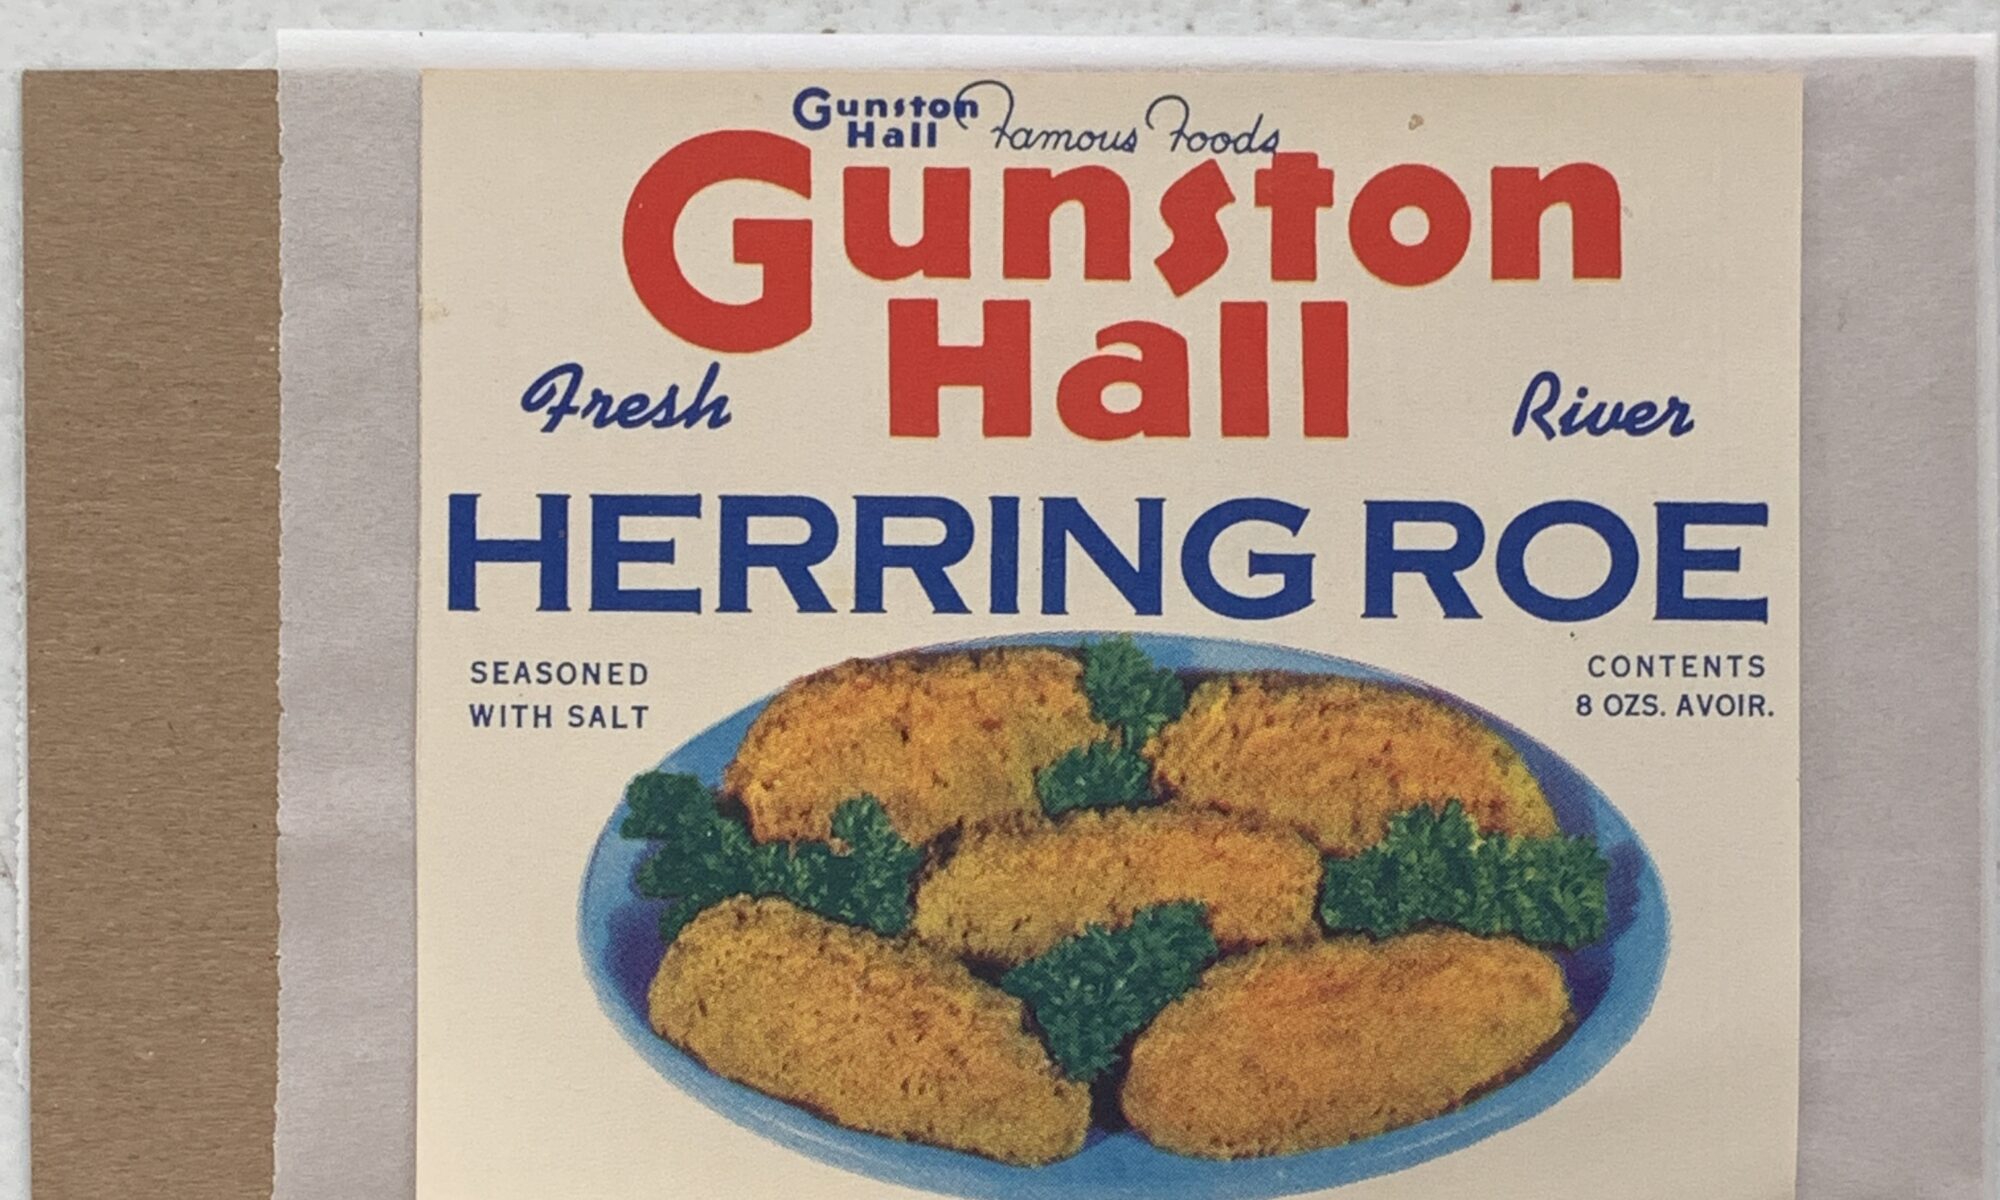 Image of a Vintage Seafood Label - Gunston Hall Herring Roe